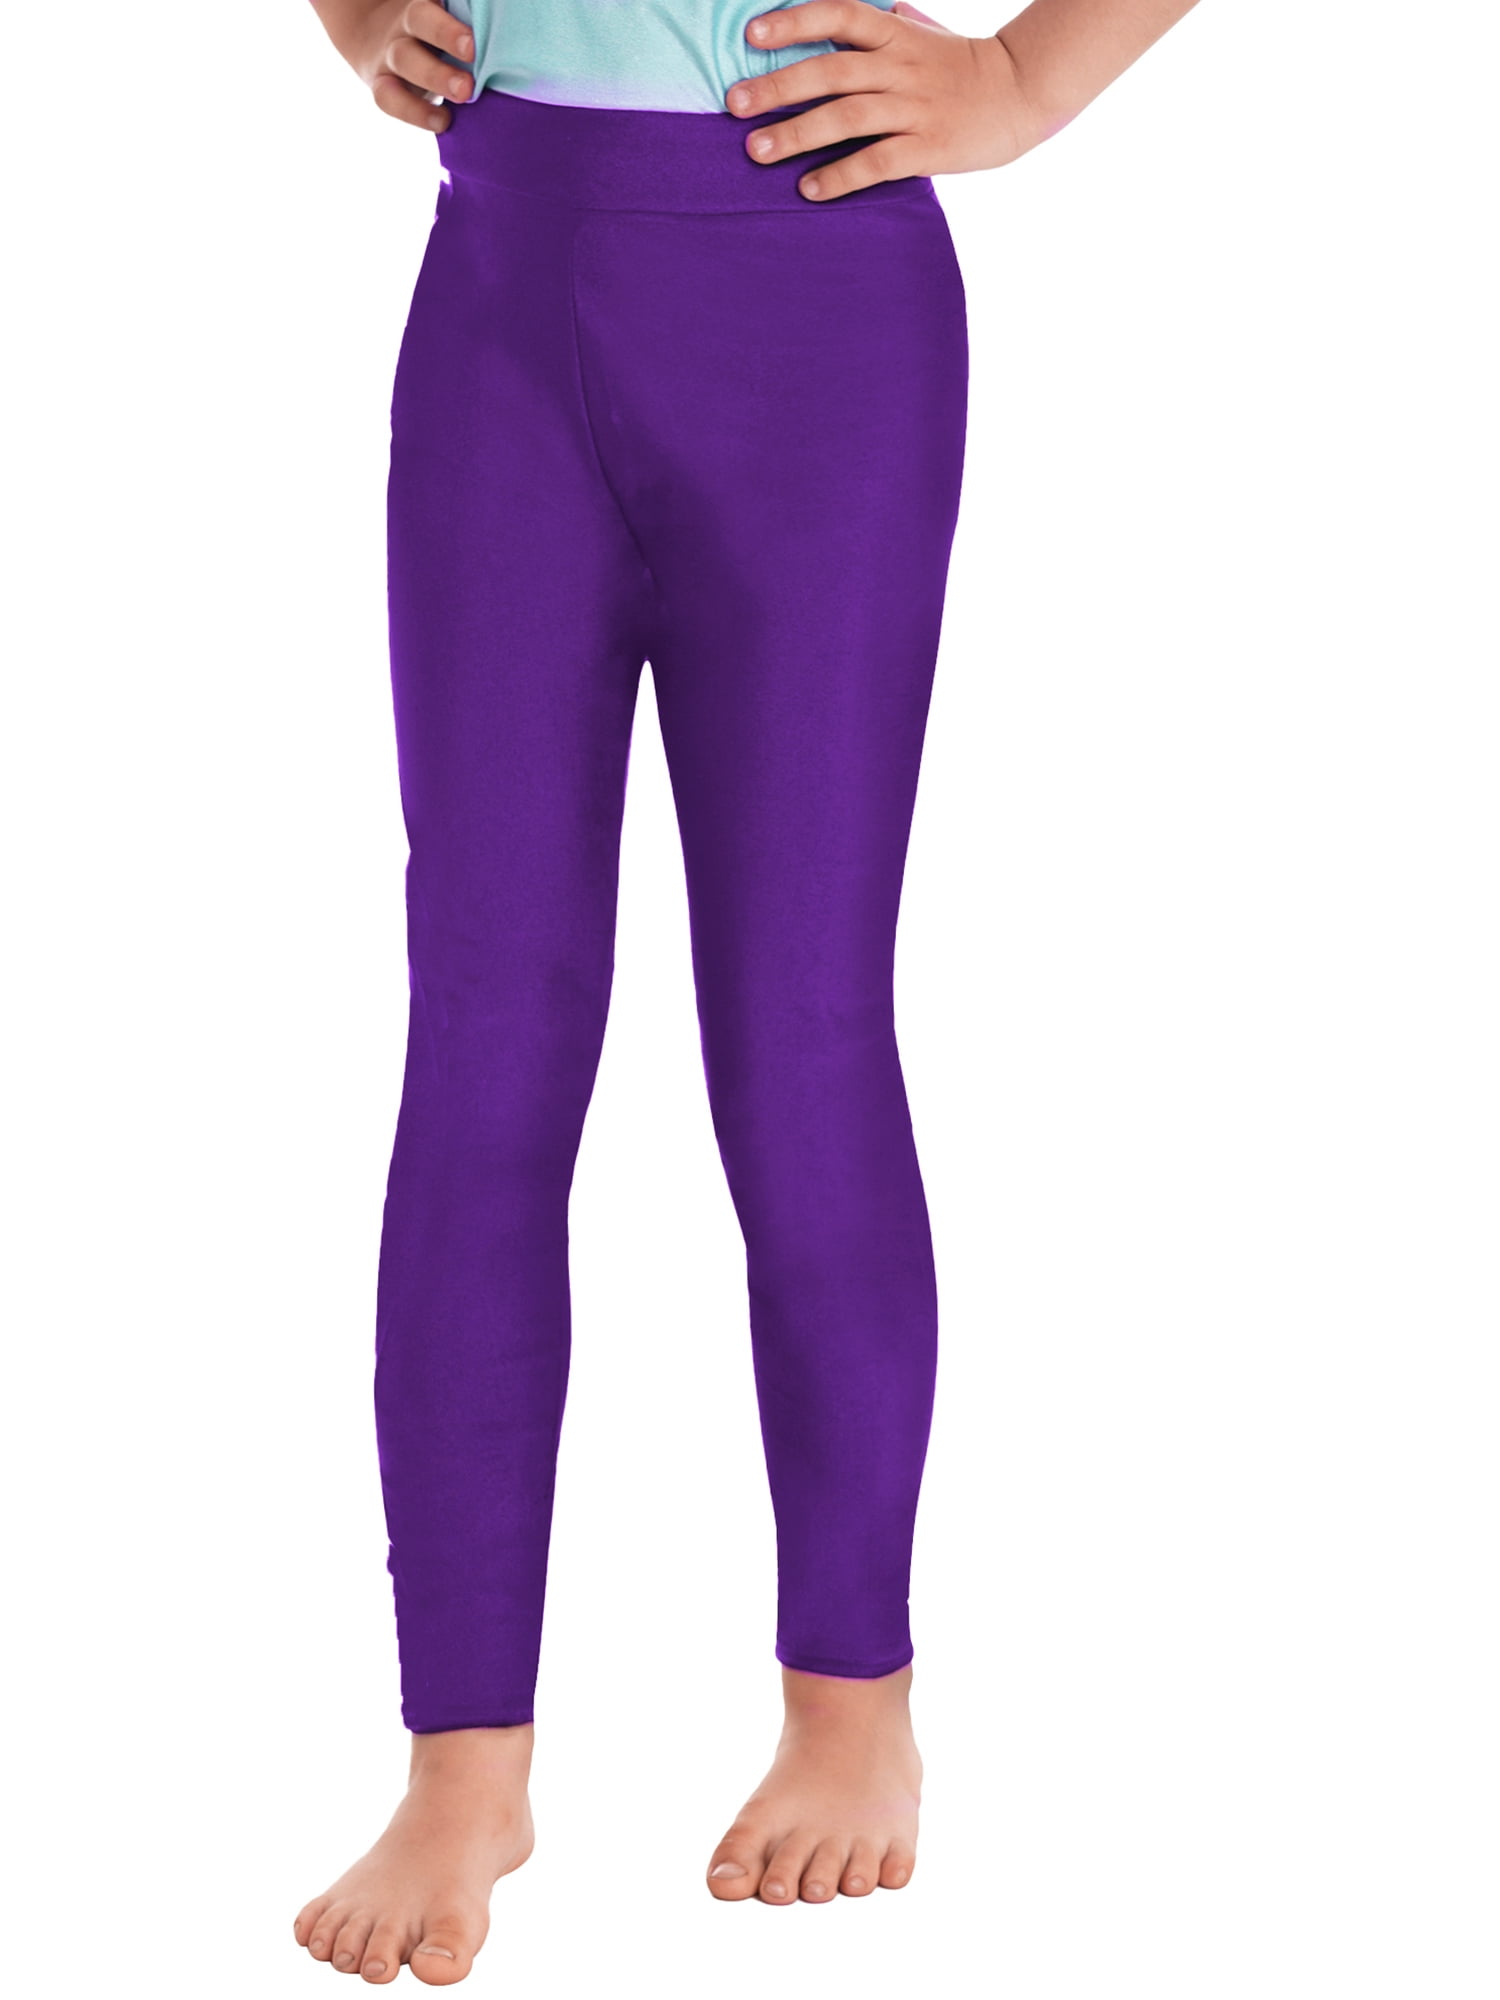 DPOIS Girls' Compression Pants Yoga Tights Athletic Sports Leggings Dark  Purple 16 